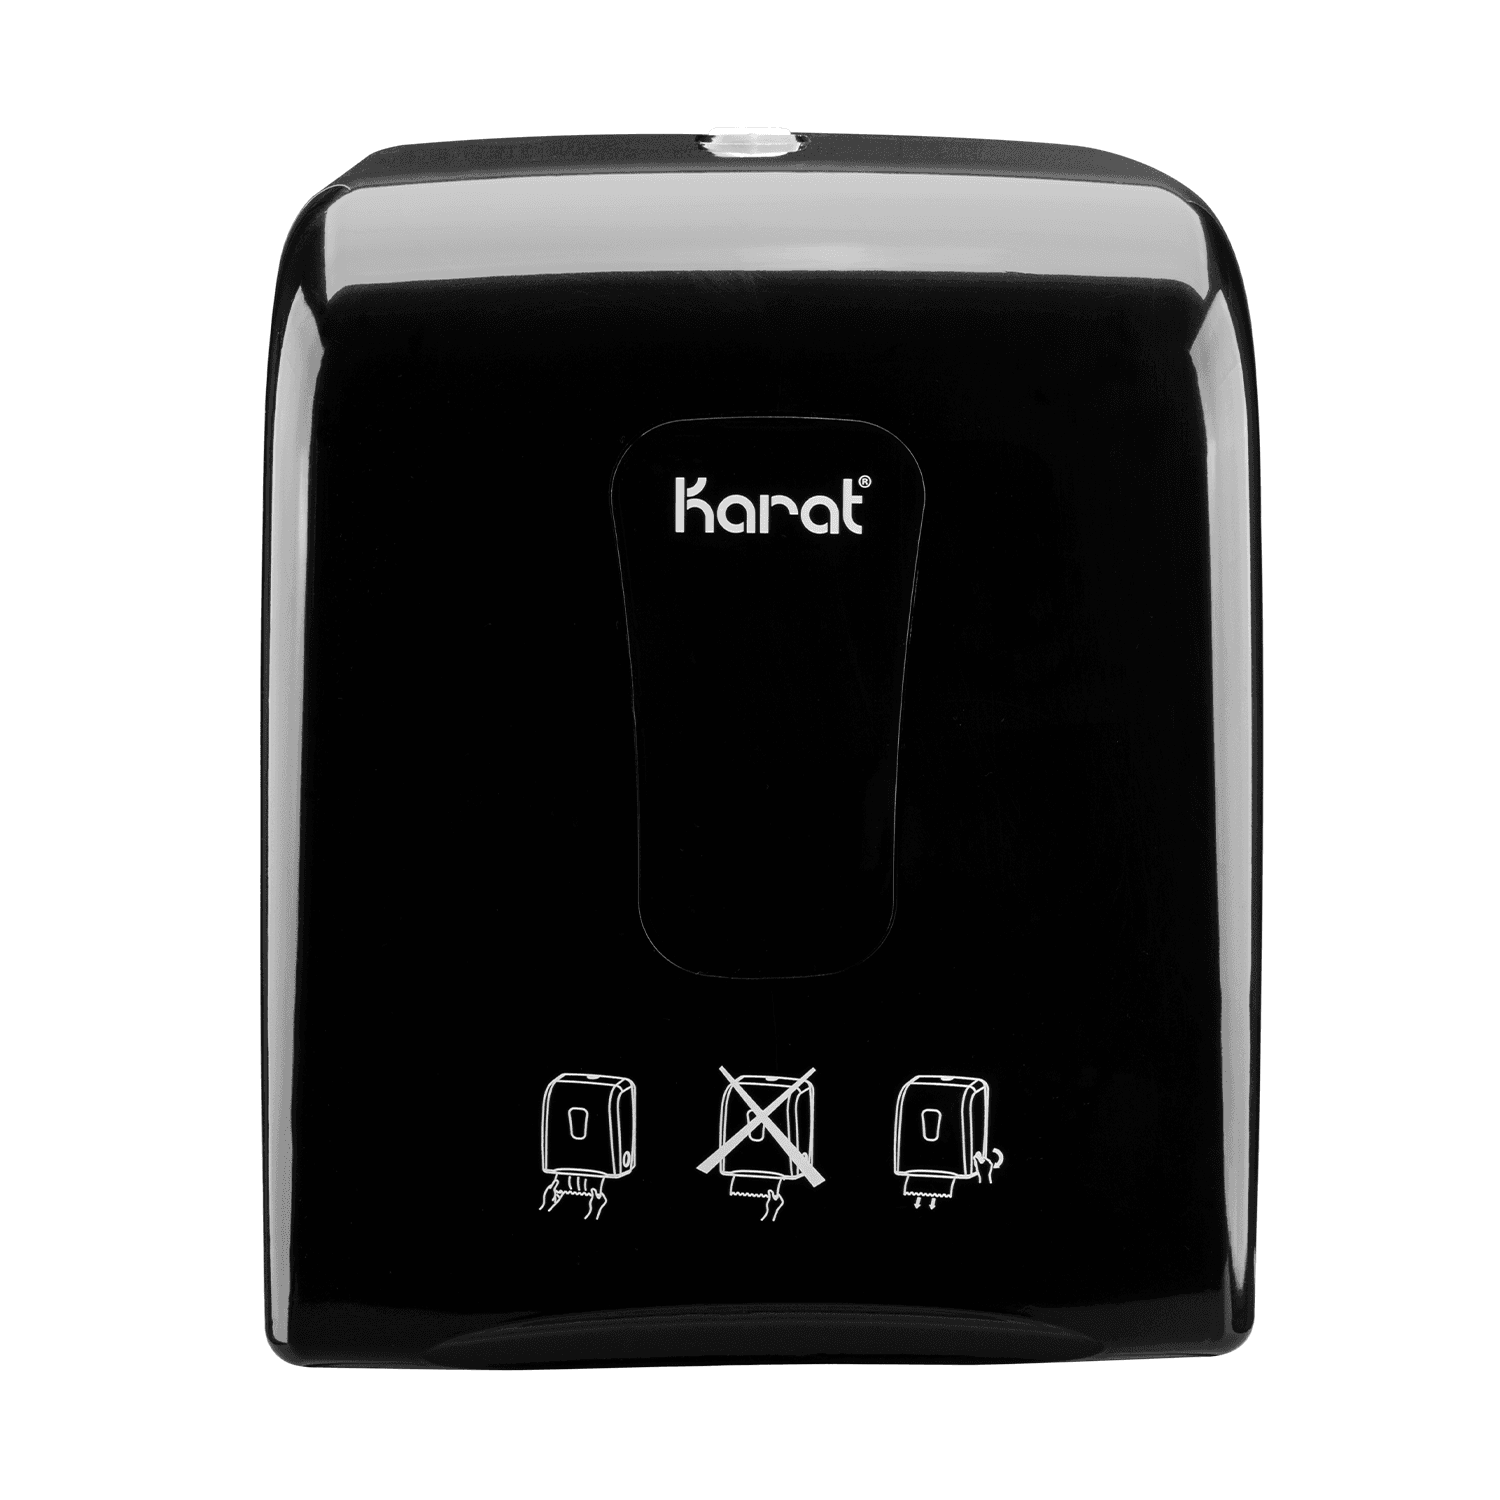 Karat Auto-Cut Roll Towel Dispenser, Black - 1 unit